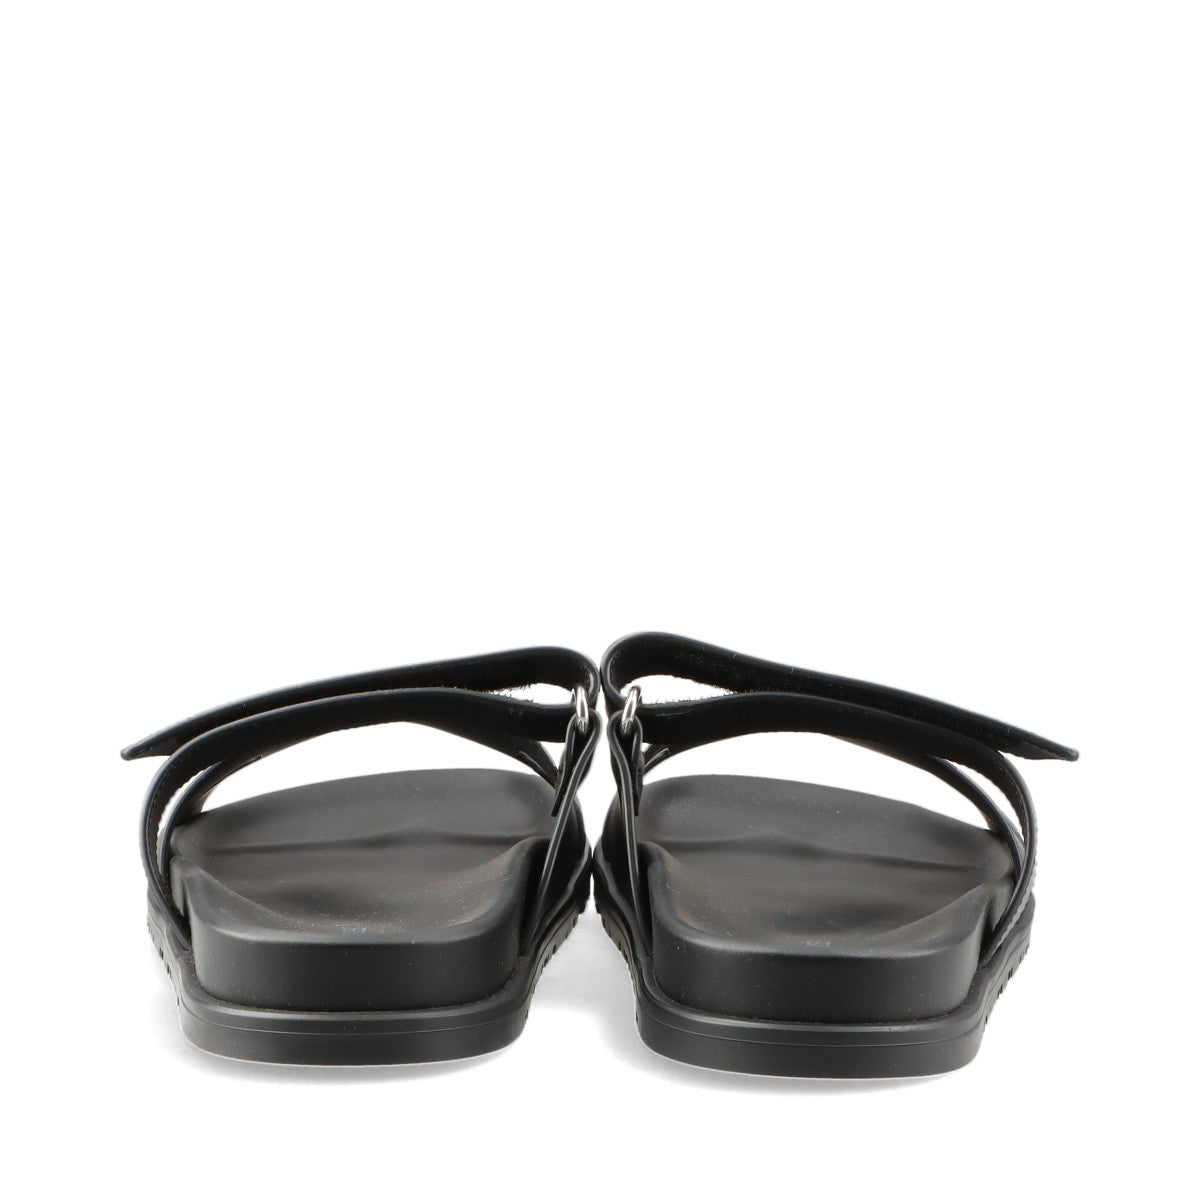 Hermès Cypre Leather Sandals 38 Ladies' Black There is a bag